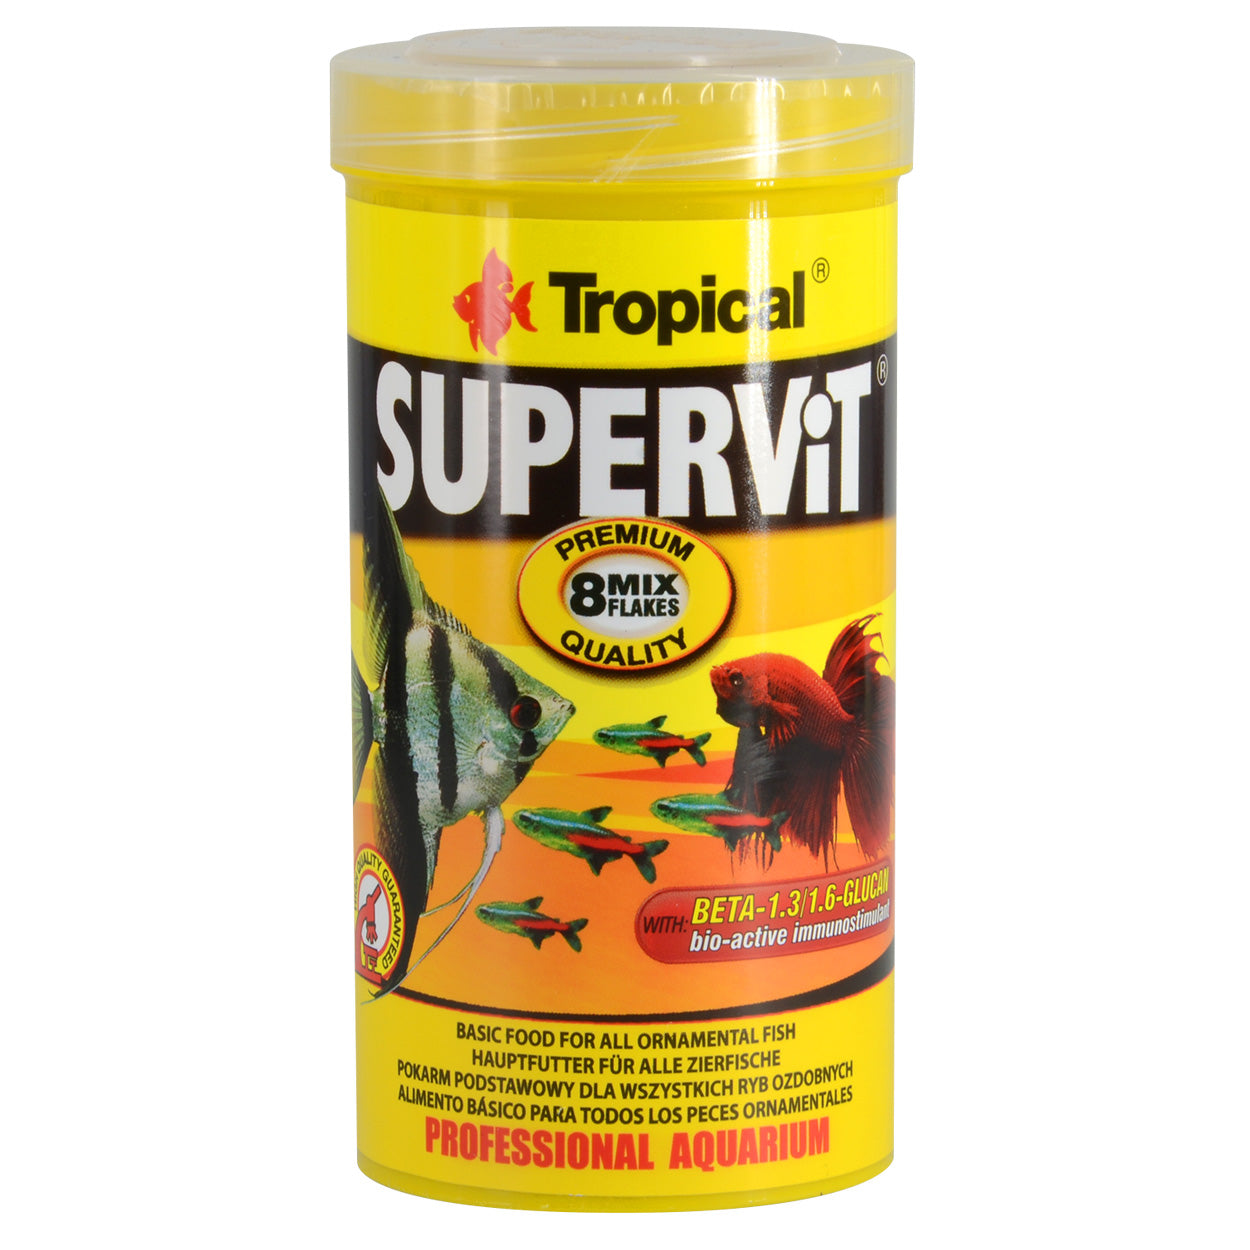 Tropical Supervit Flakes - 50g